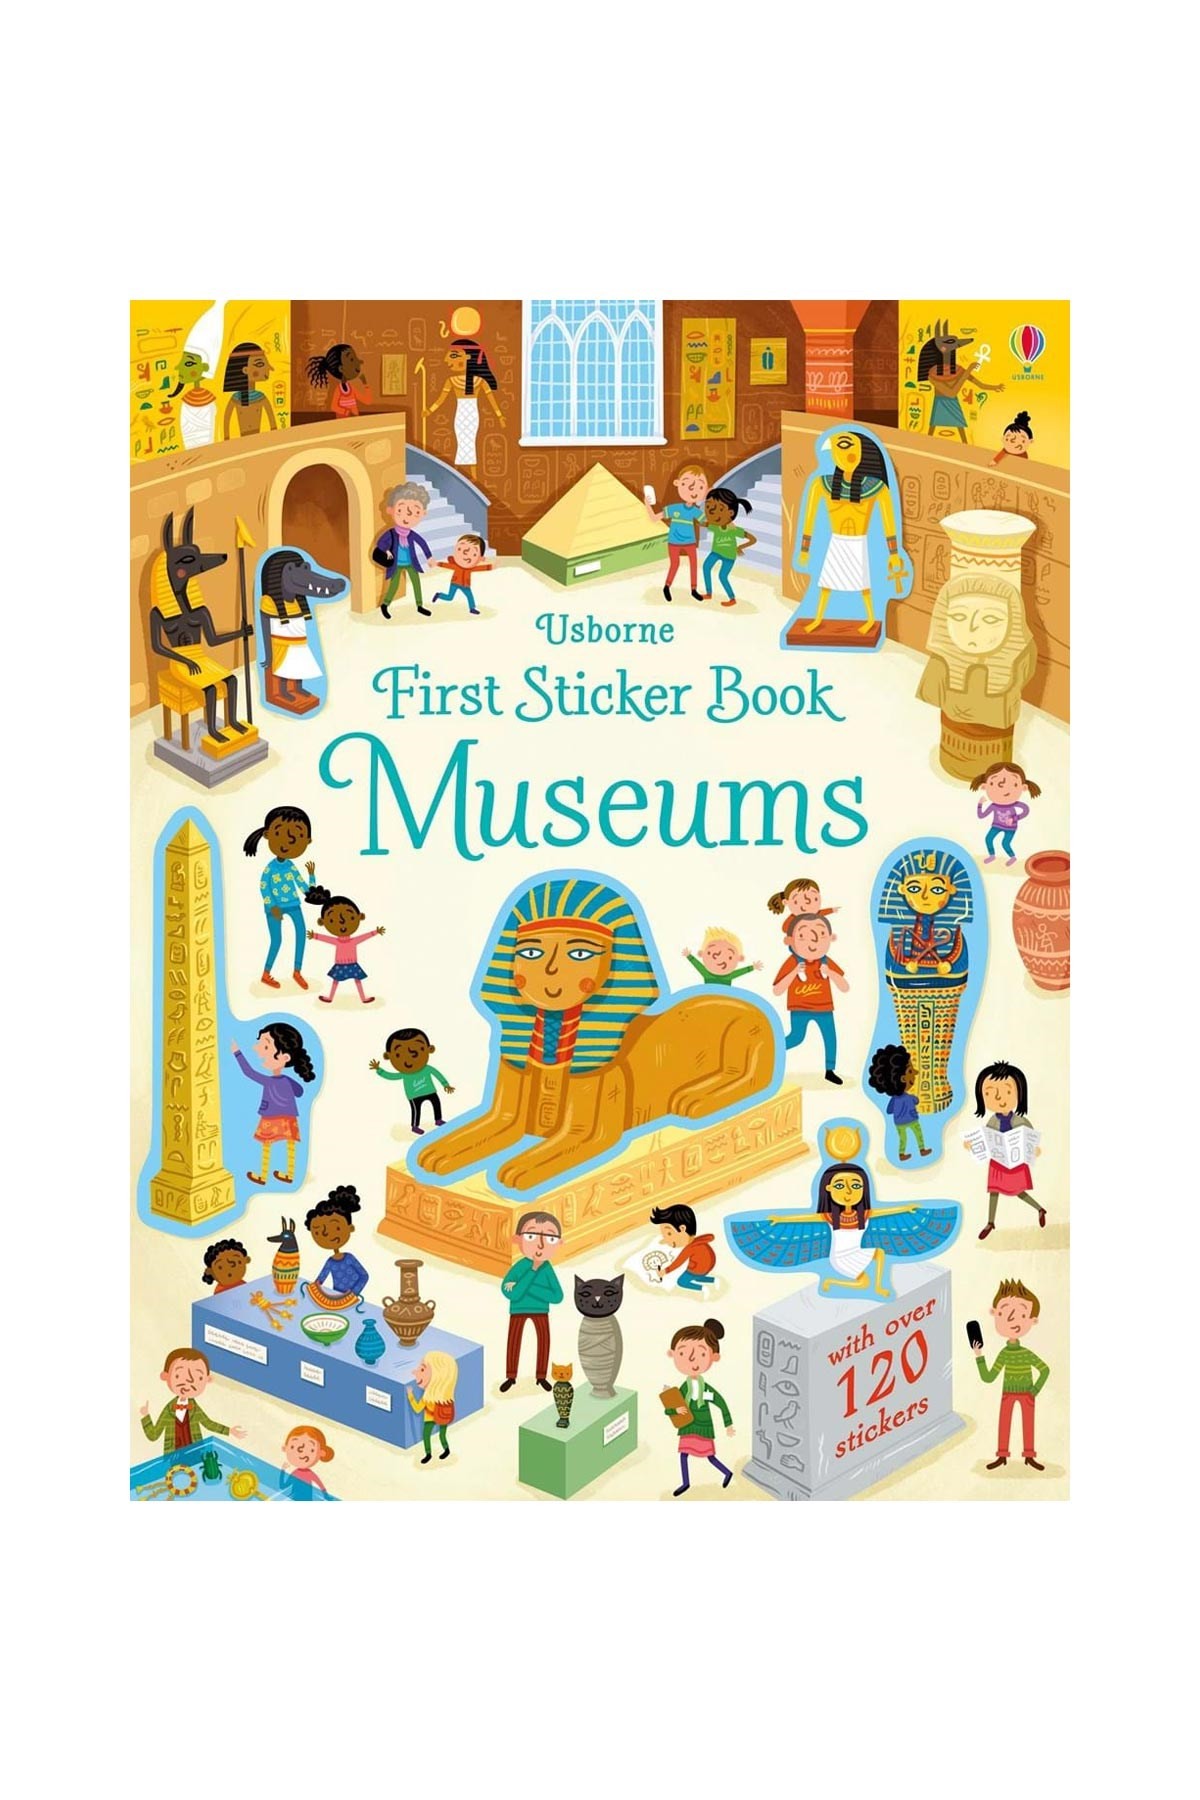 The Usborne First Sticker Book Museums